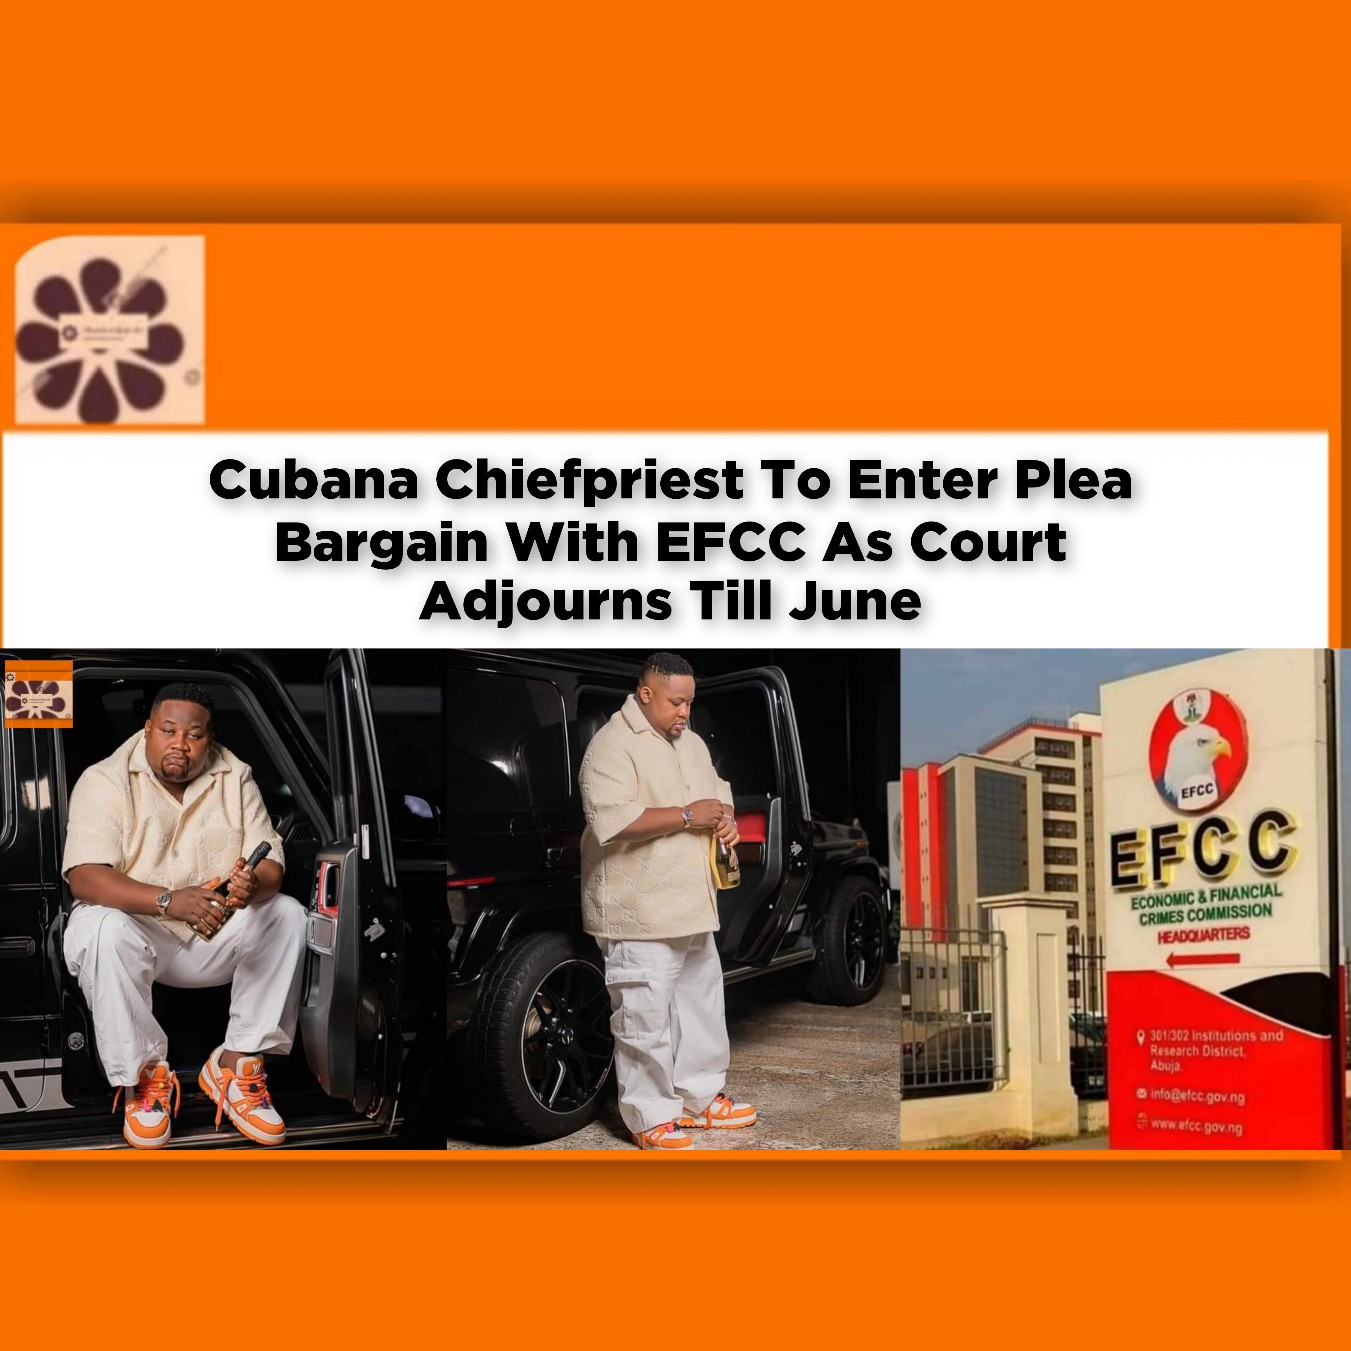 Cubana Chiefpriest To Enter Plea Bargain With EFCC As Court Adjourns Till June ~ OsazuwaAkonedo #Adeleke